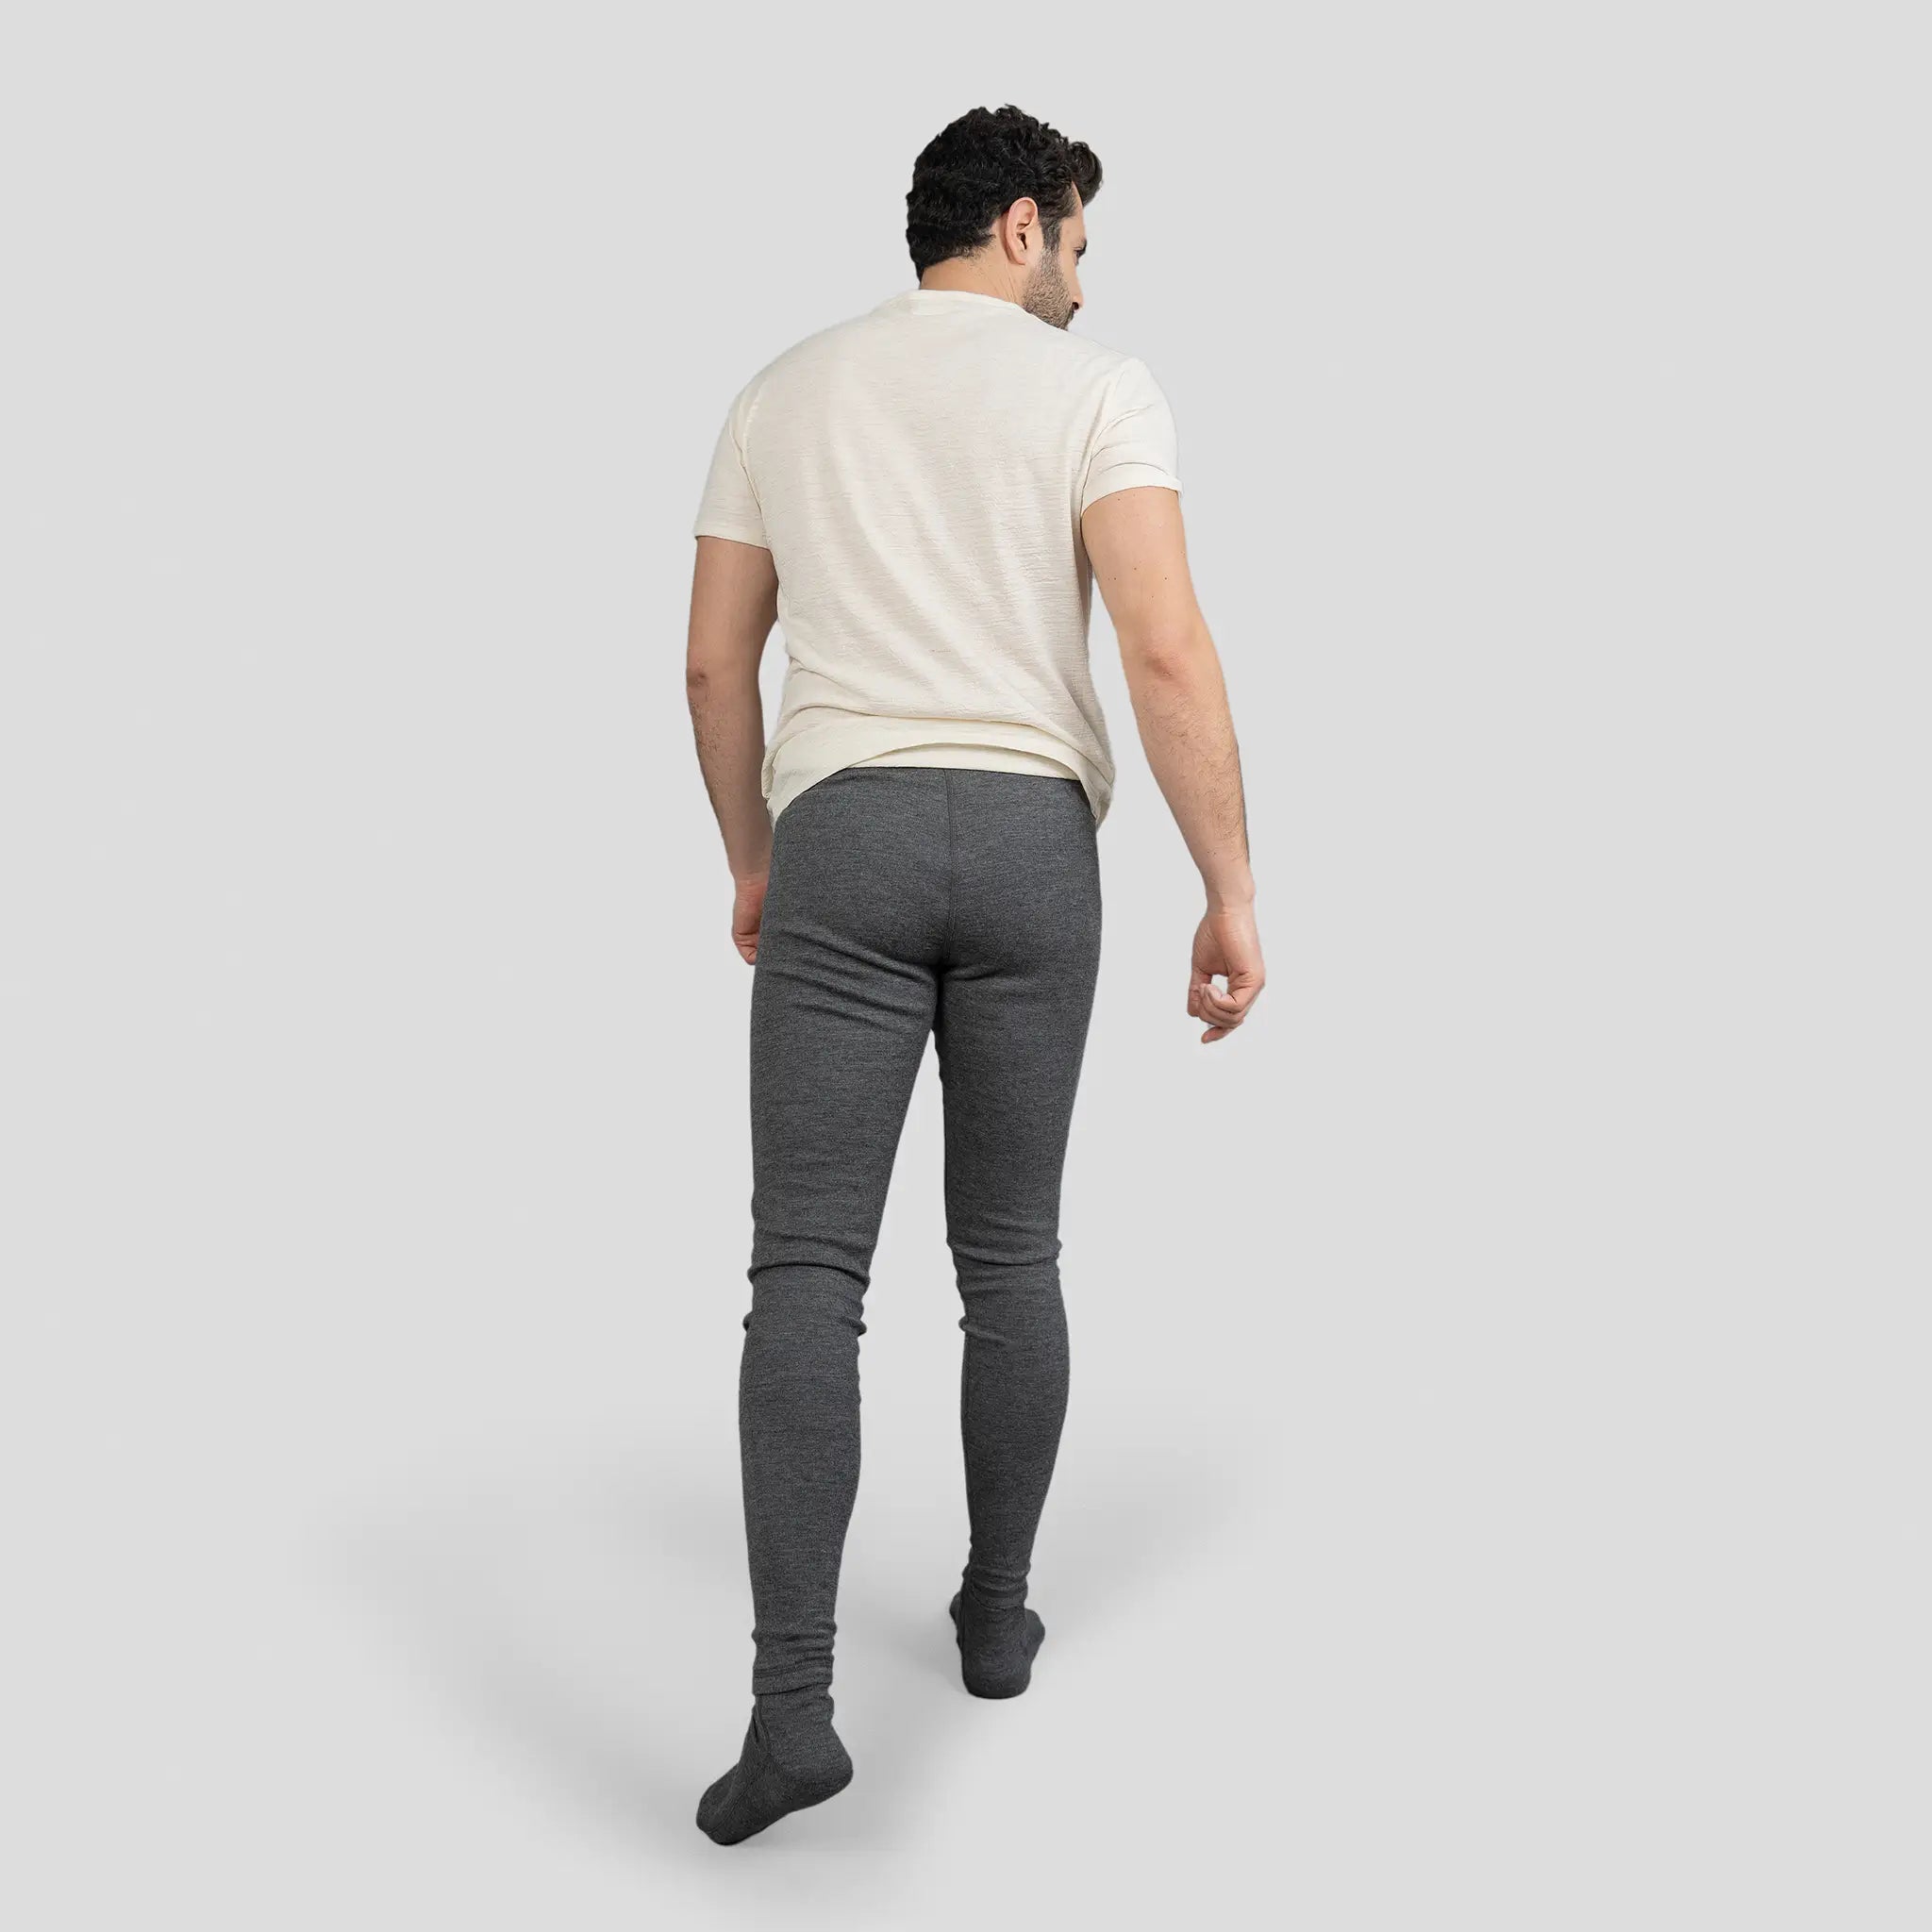 LASCANA Leggings - Trousers - hellgrau-meliert/mottled light grey